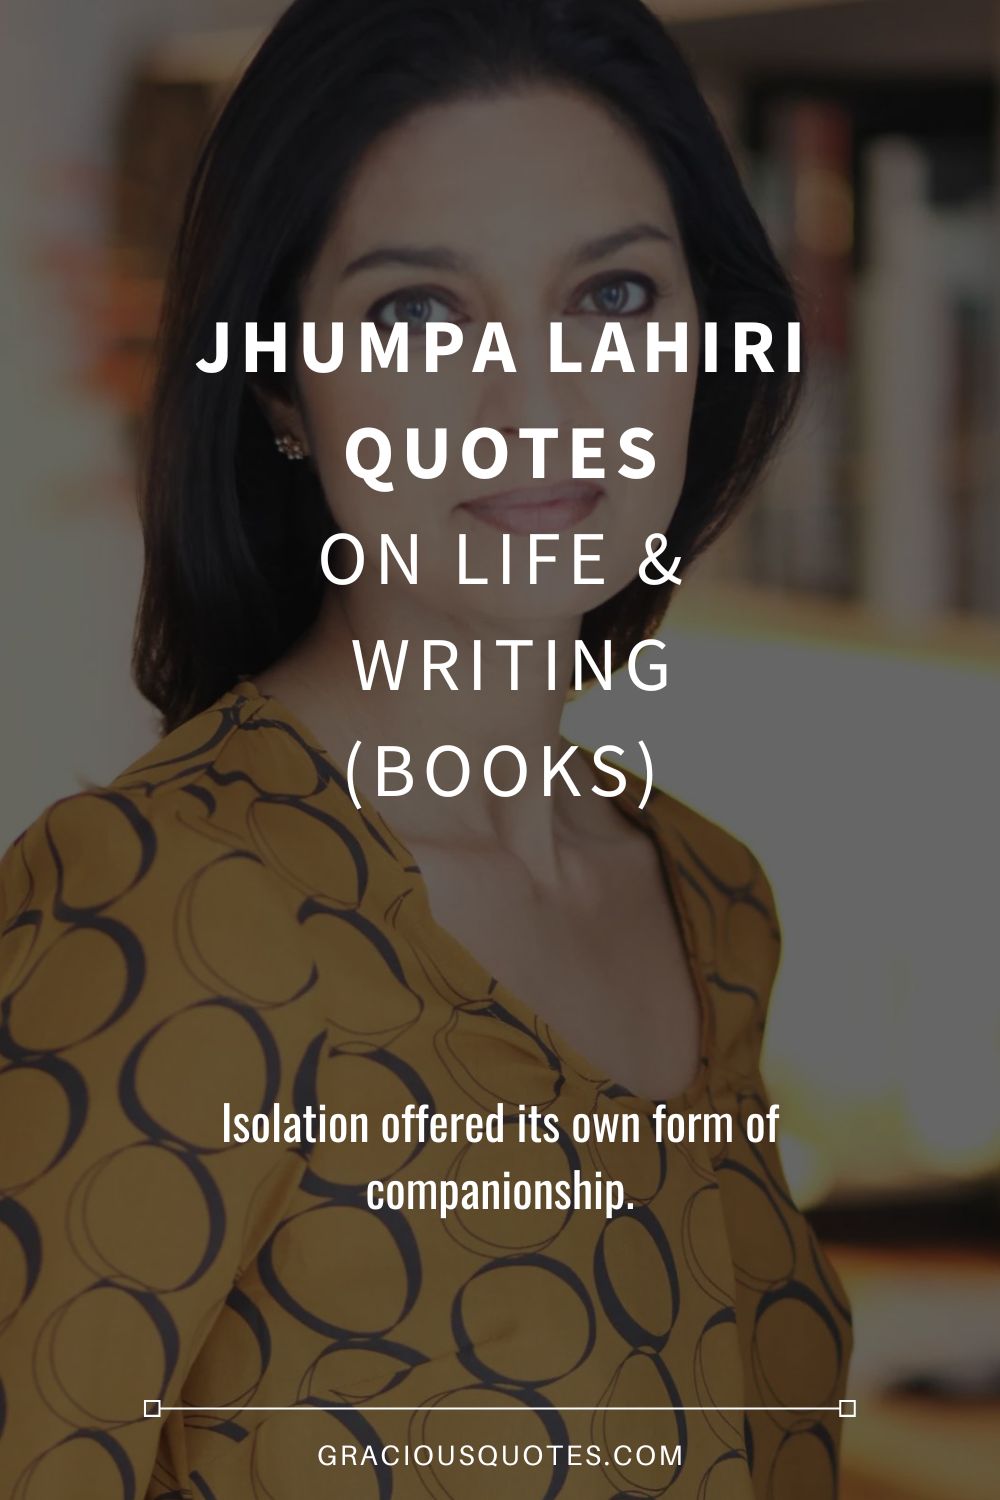 Jhumpa Lahiri Quotes on Life & Writing (BOOKS) - Gracious Quotes